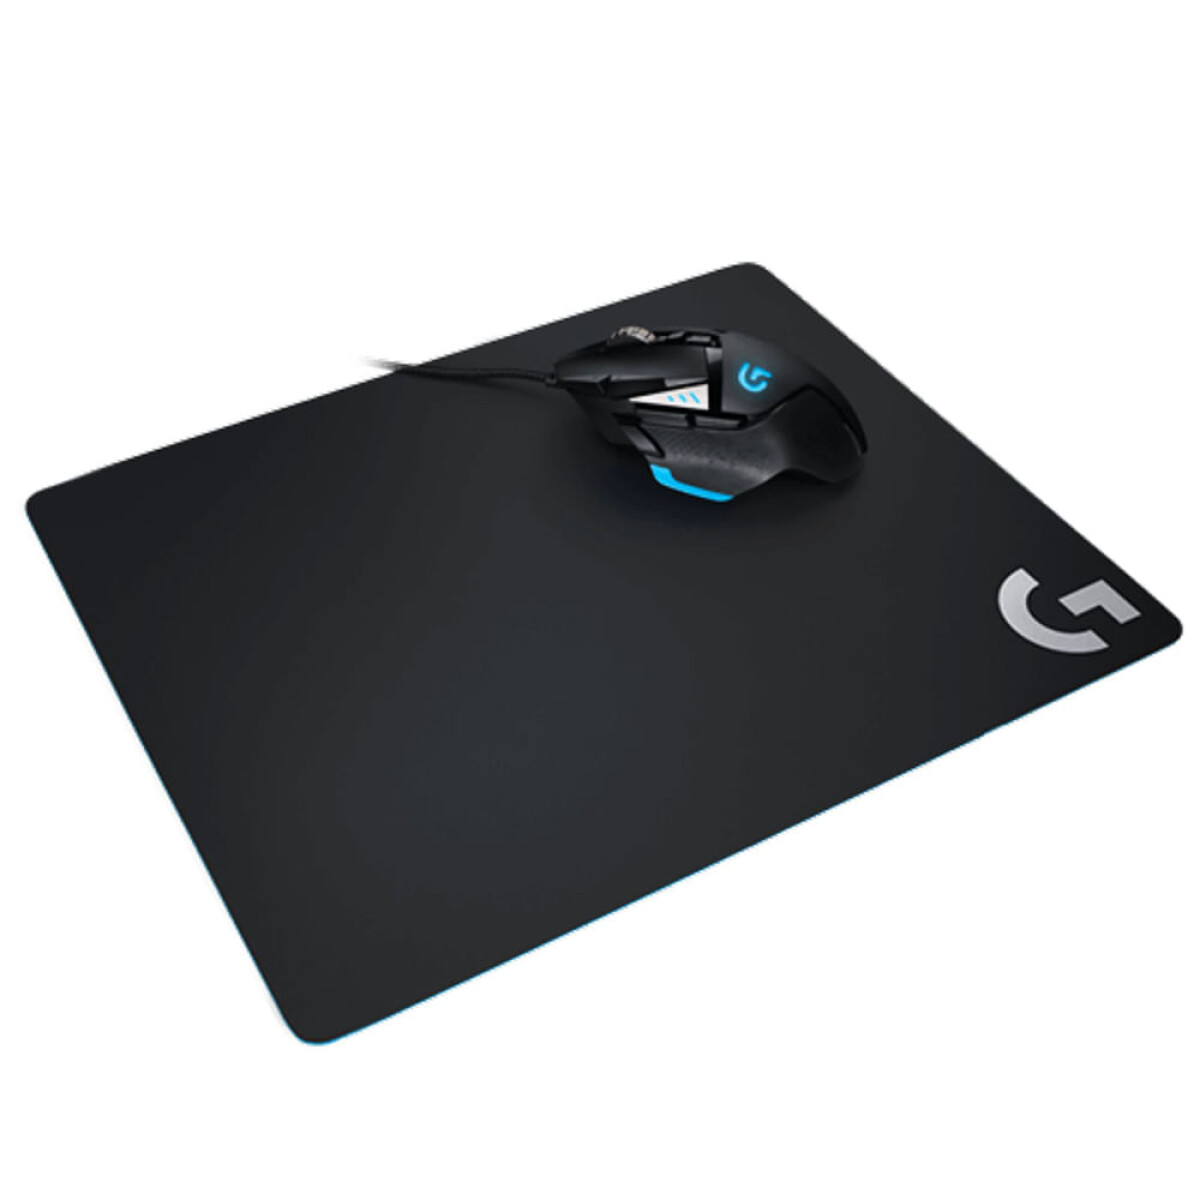 Mouse pad gamer de tela logitech g240 ultra fino - Negro 